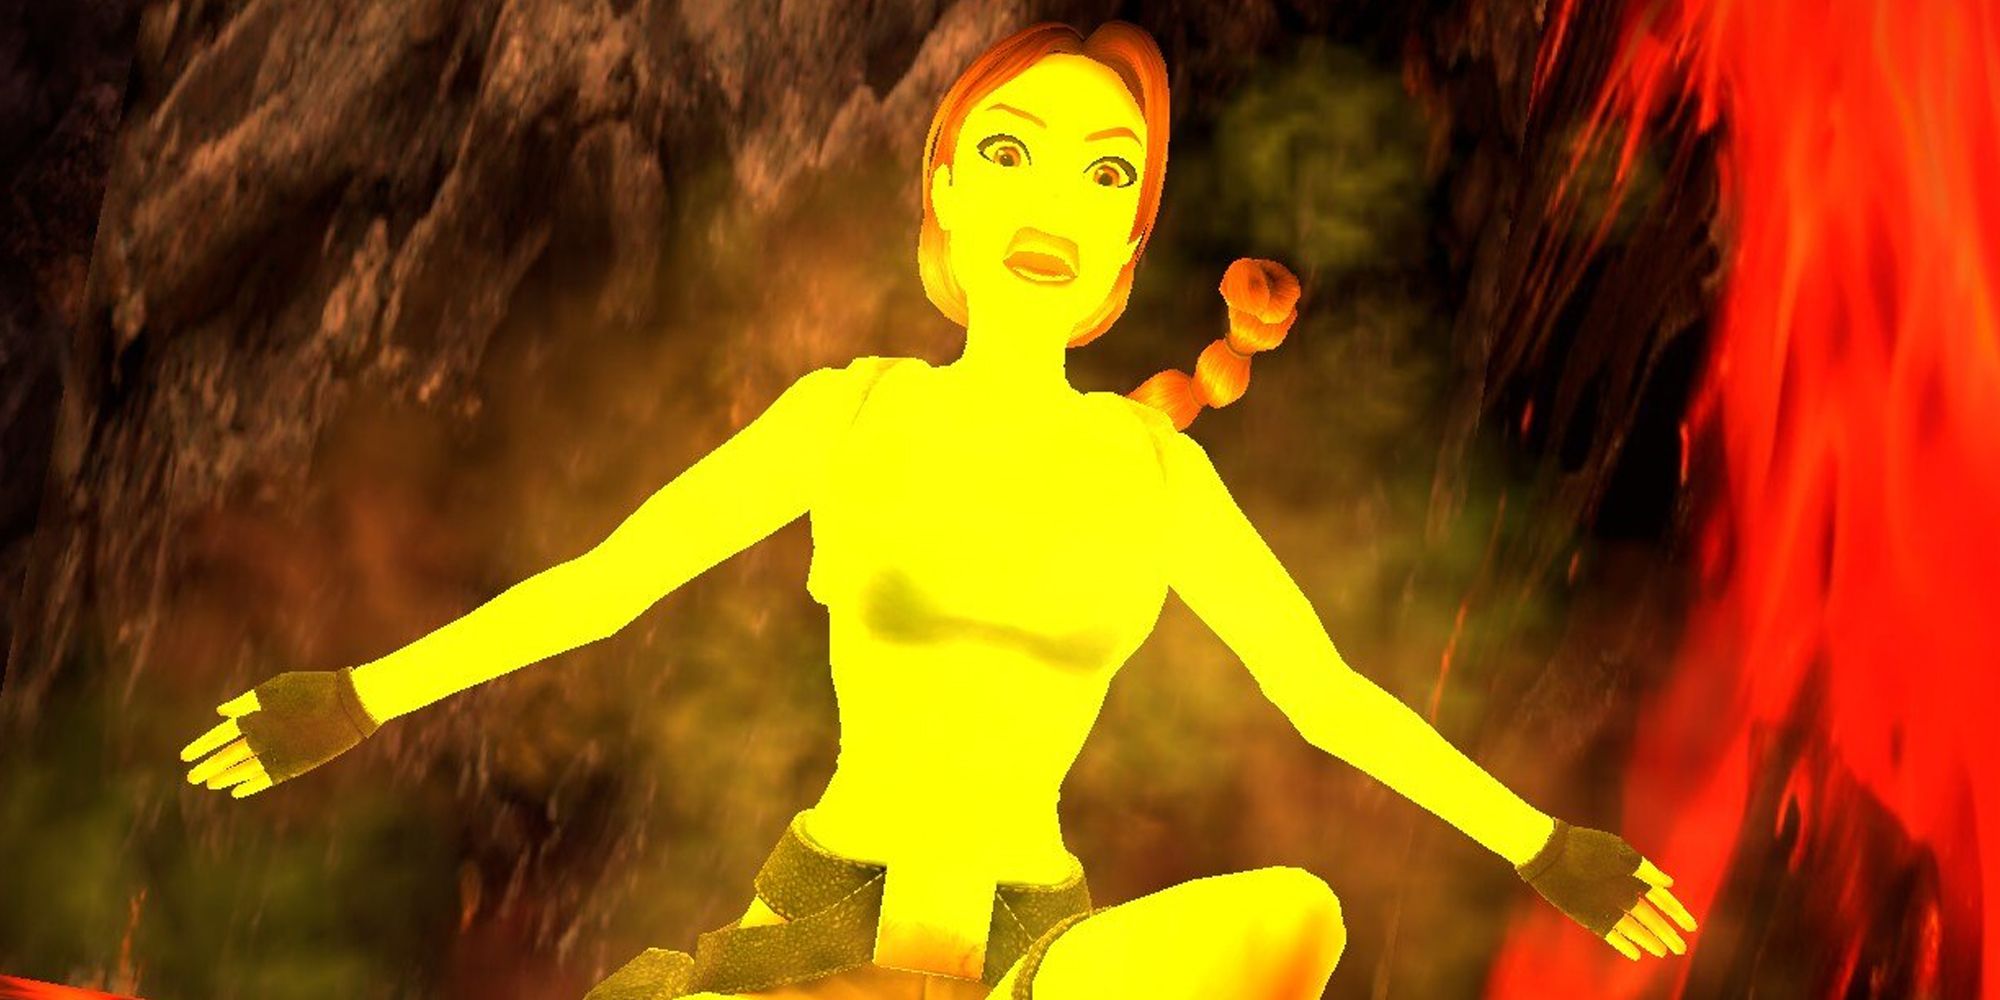 Lara Croft screaming as she burns alive in lava, glowing bright yellow